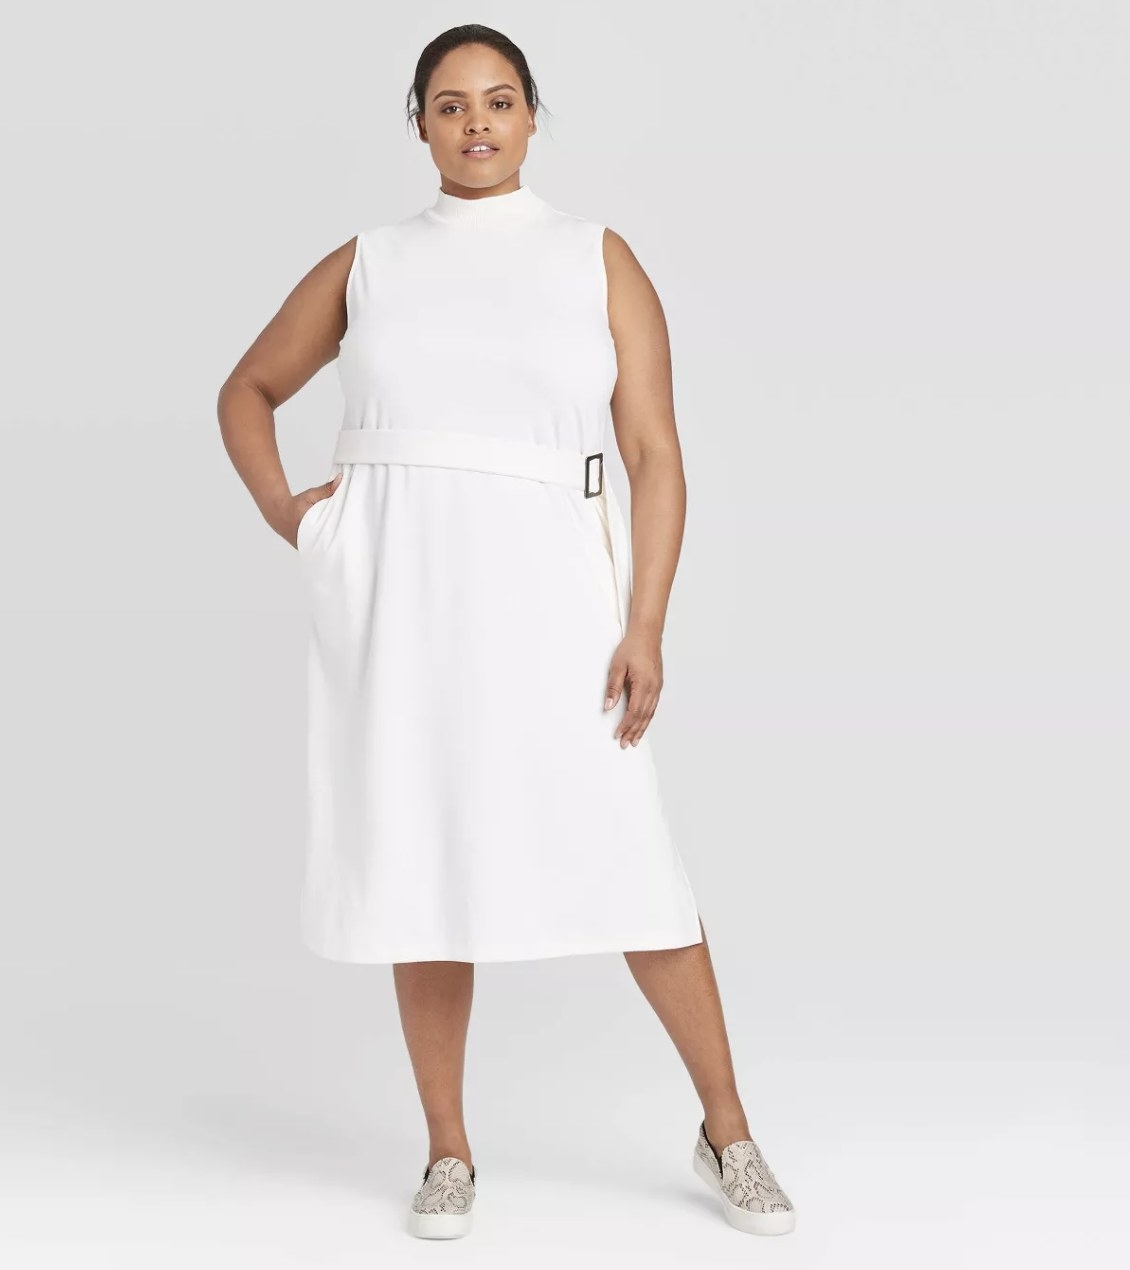 Model wearing the dress in white 